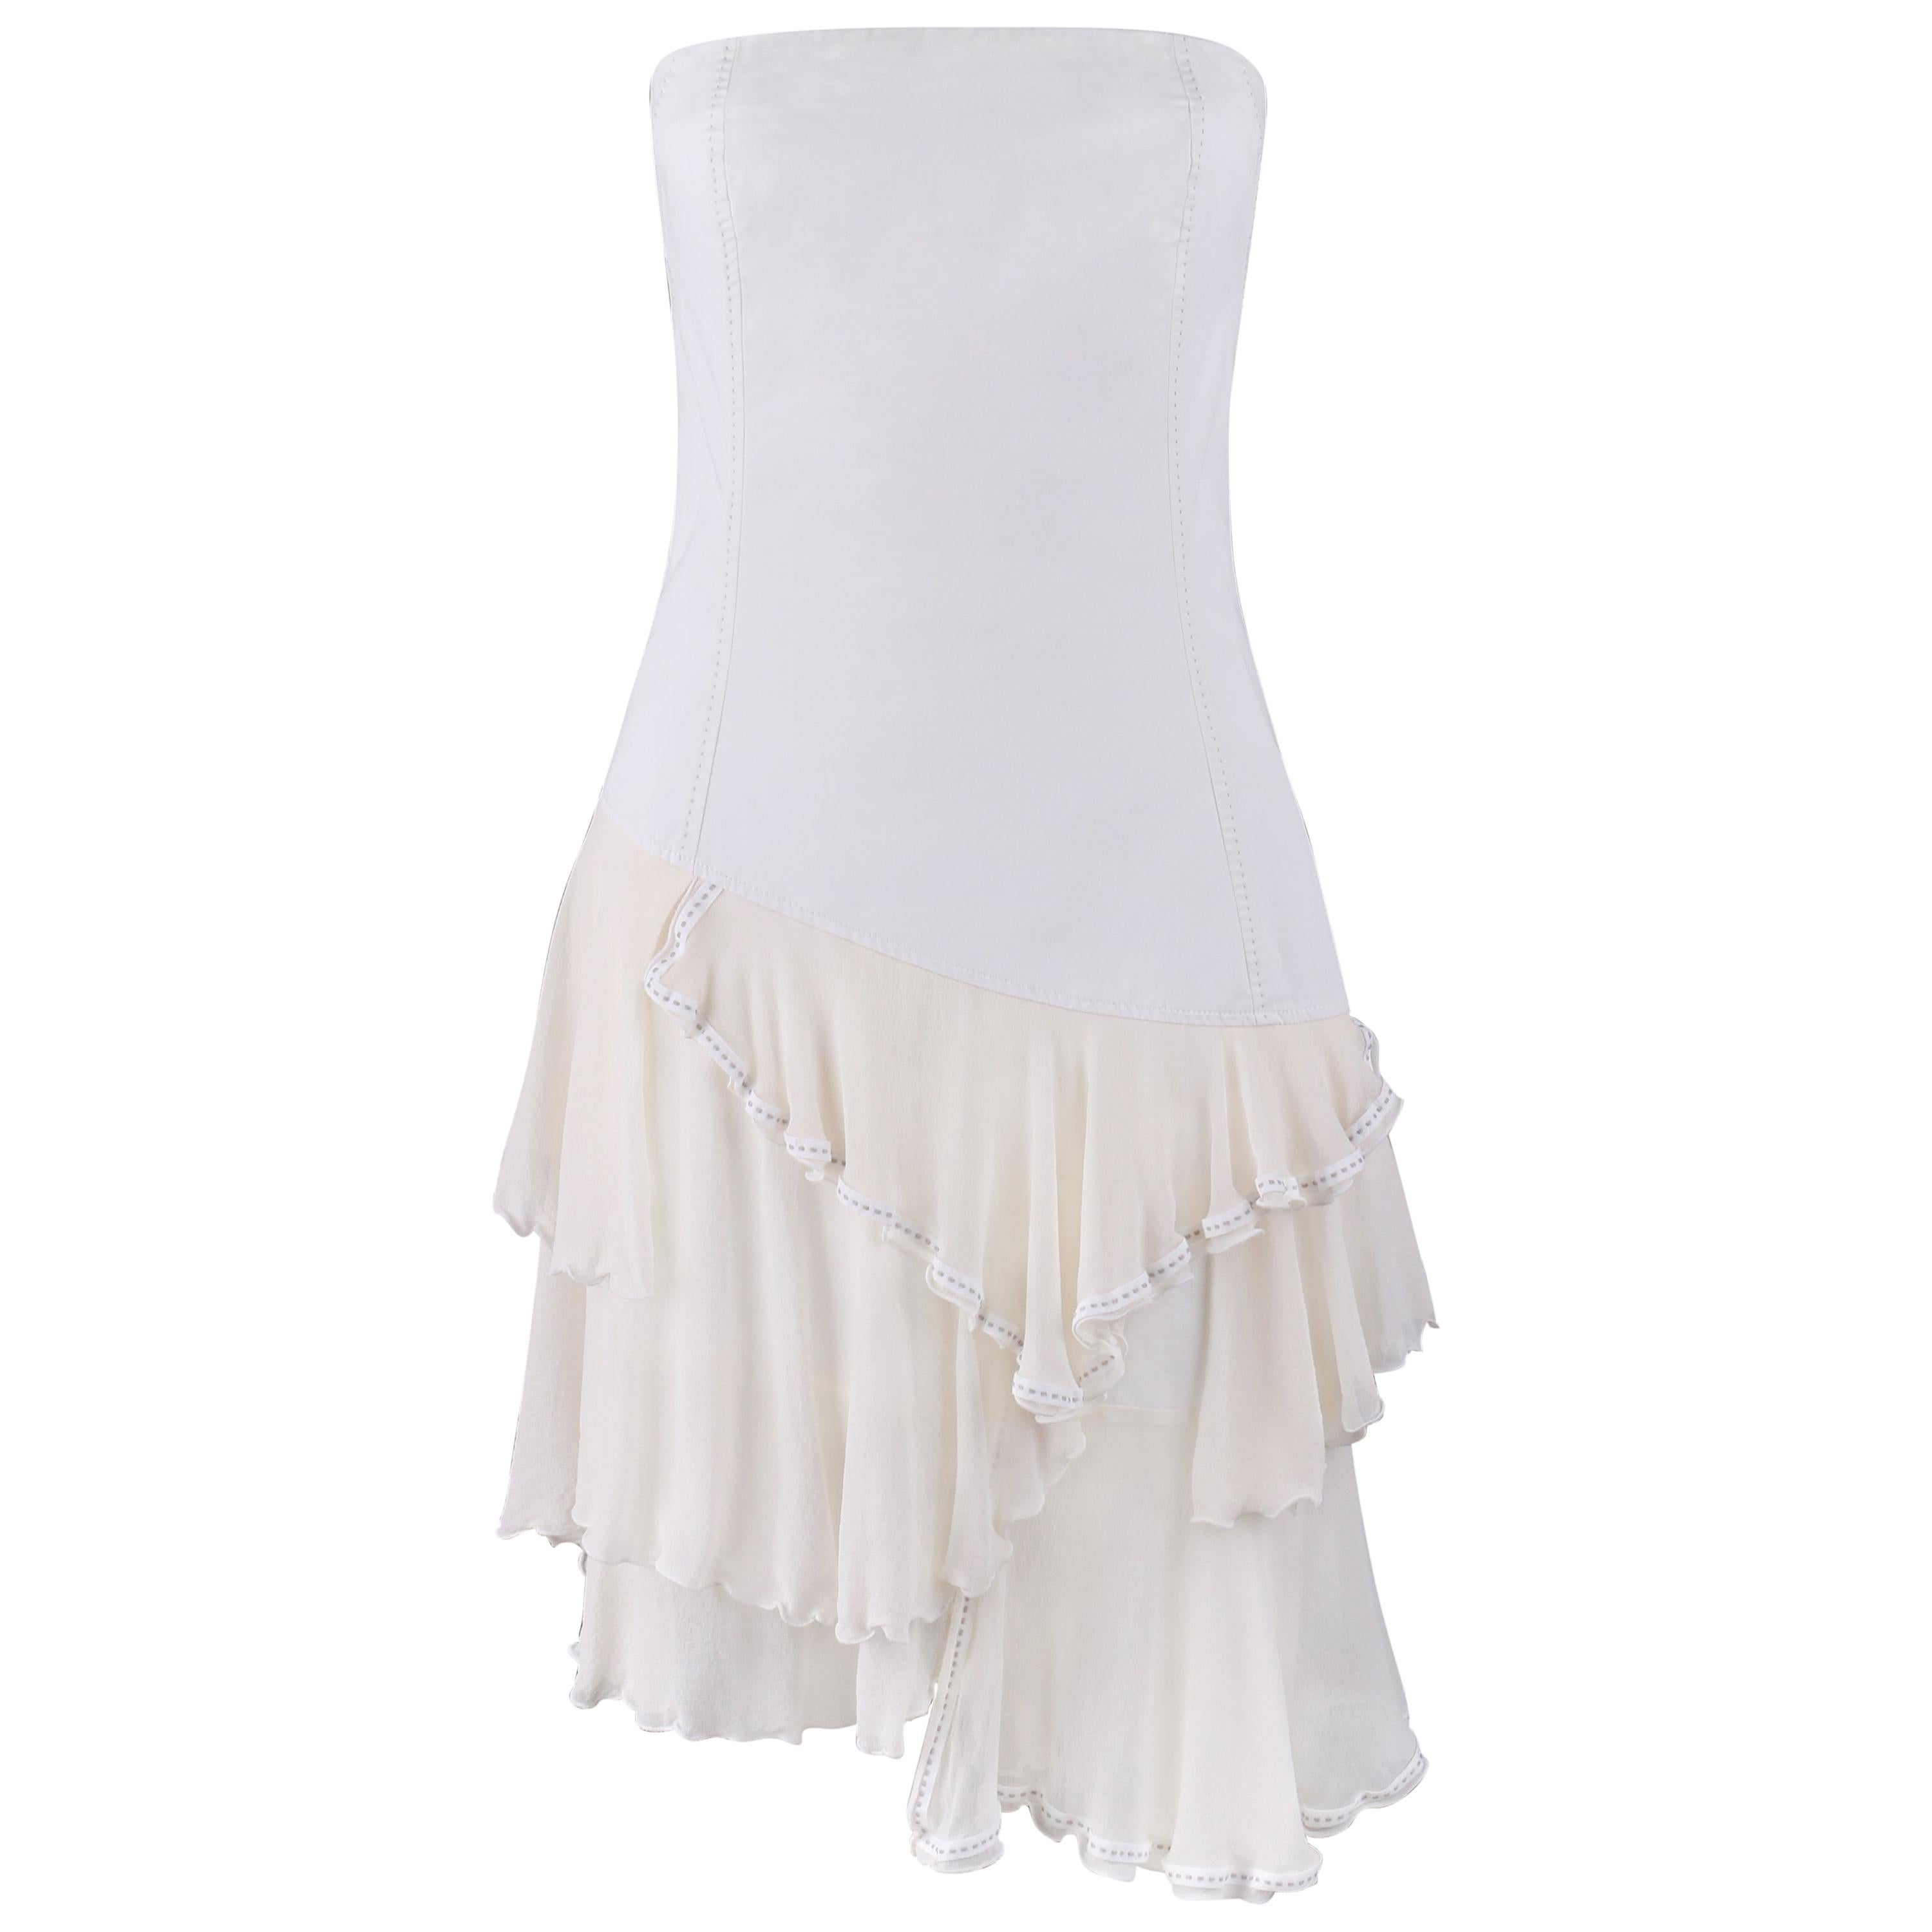 ALEXANDER McQUEEN 1996 "The Hunger" White Ivory Silk Crepe Asymmetric Dress For Sale